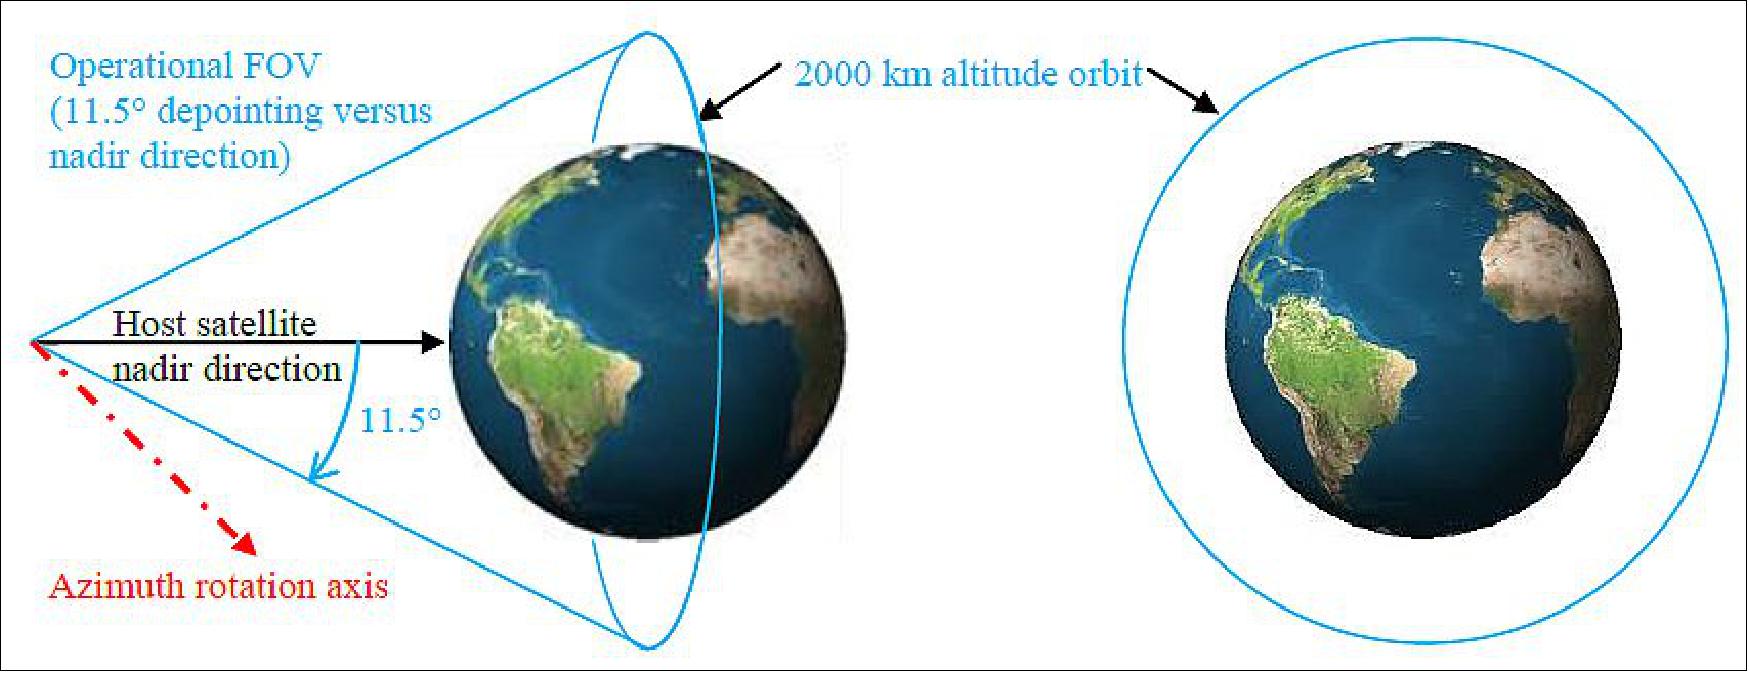 Figure 39: LCT operational FOV (versus the hosting satellite nadir direction), image credit: Airbus DS